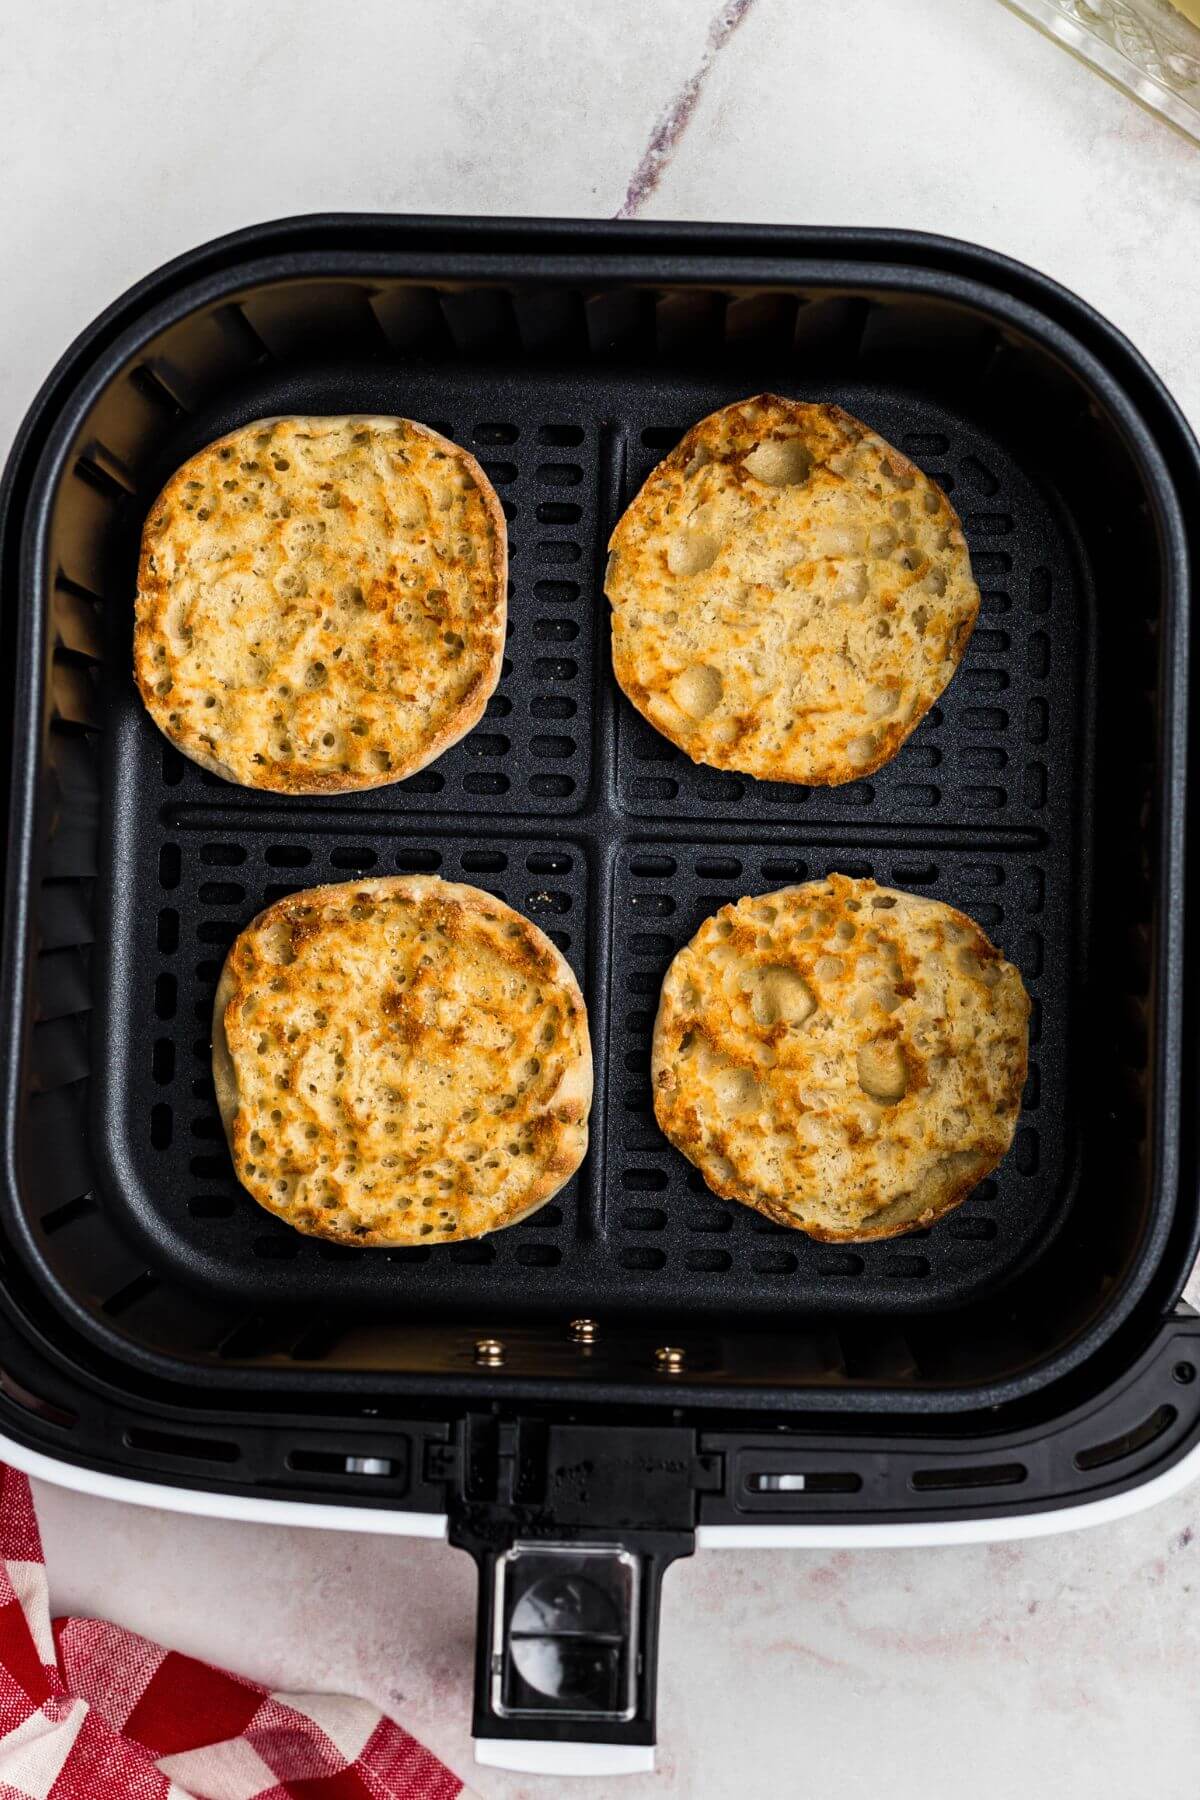 Golden crispy English muffins in the air fryer basket. 